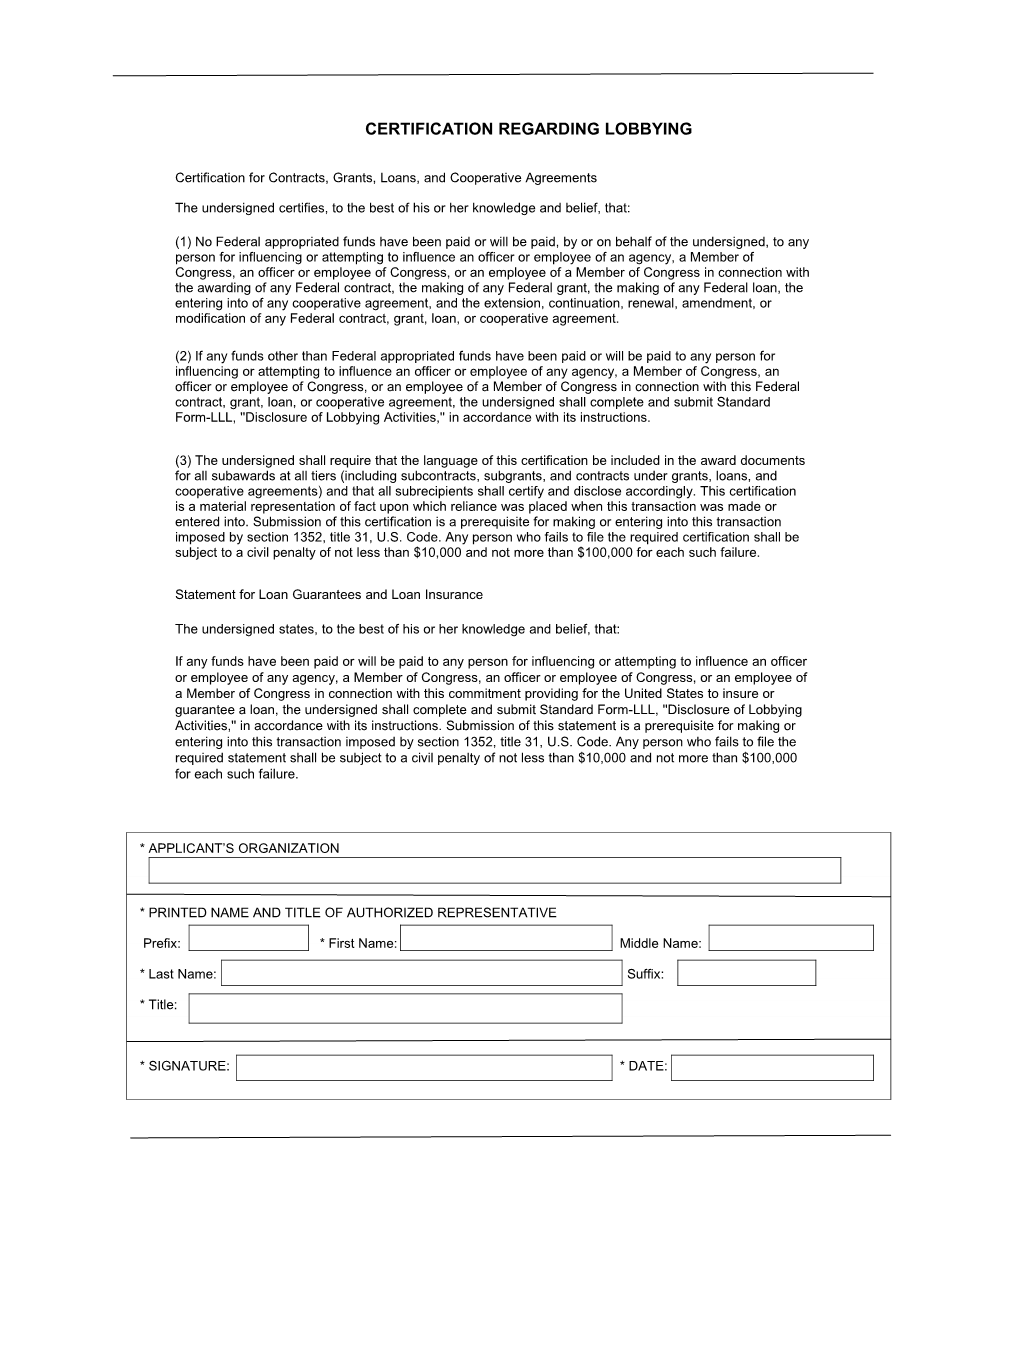 ED 80-0013 Form - Certification Regarding Lobbying (MS Word)